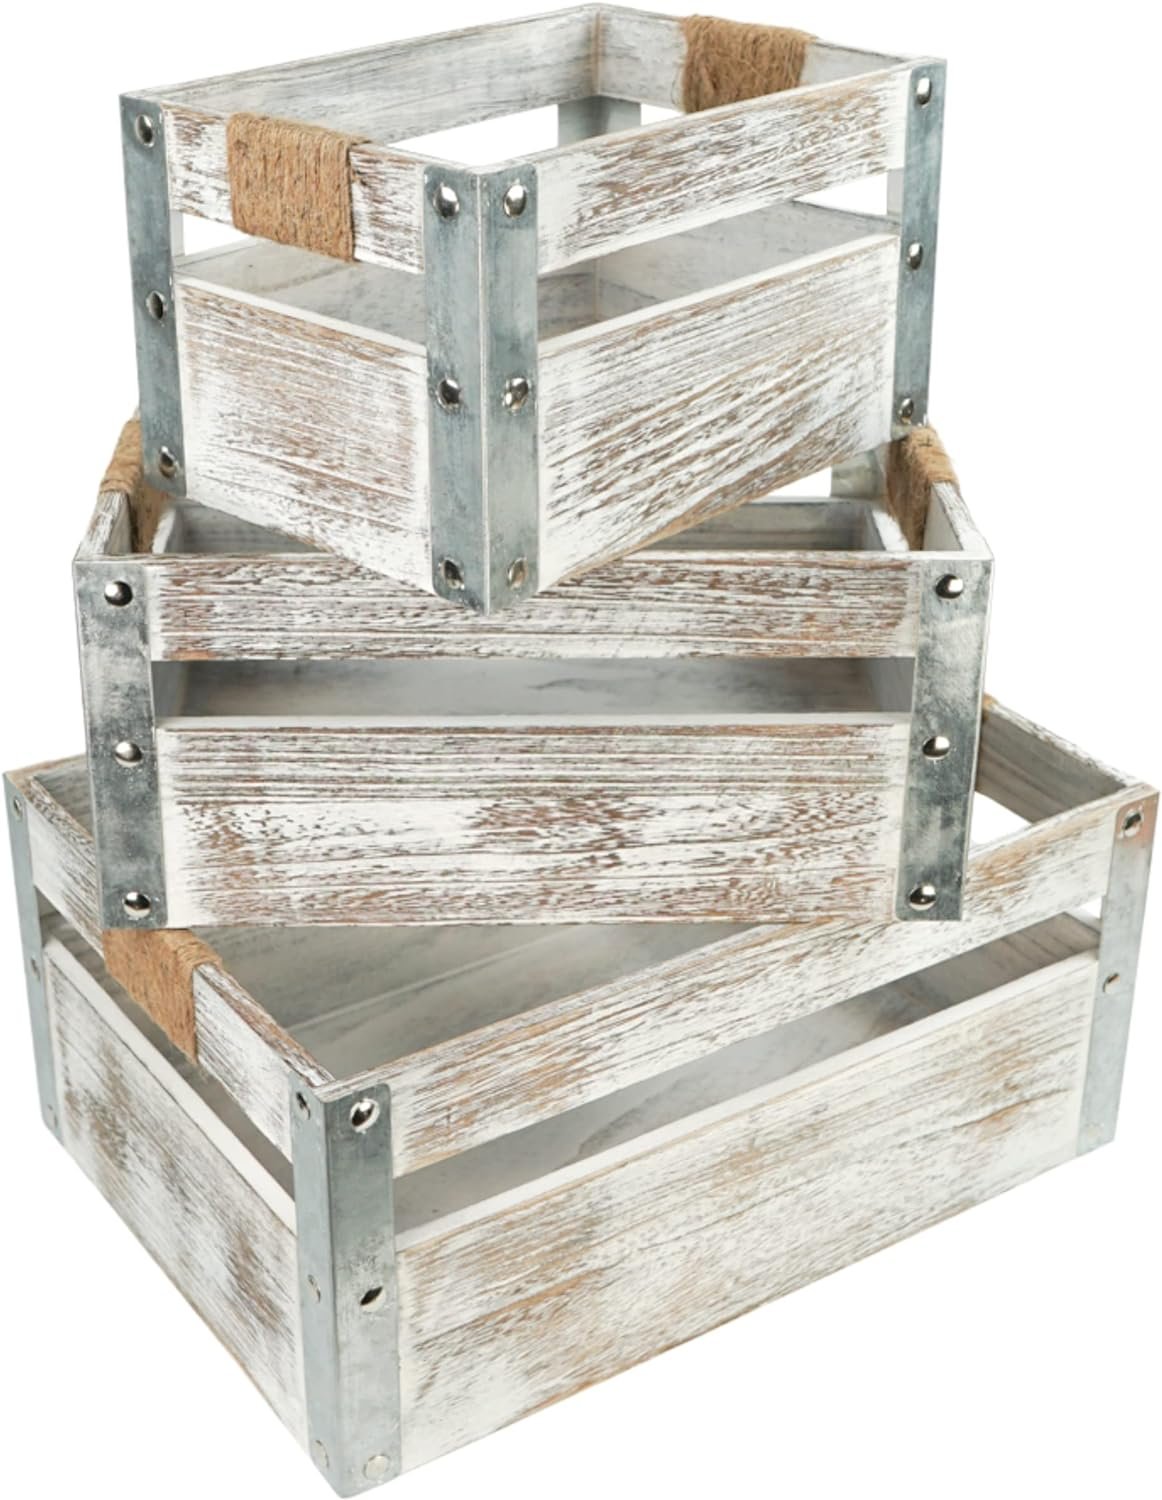 Gozo Wooden Storage Crates Set Review